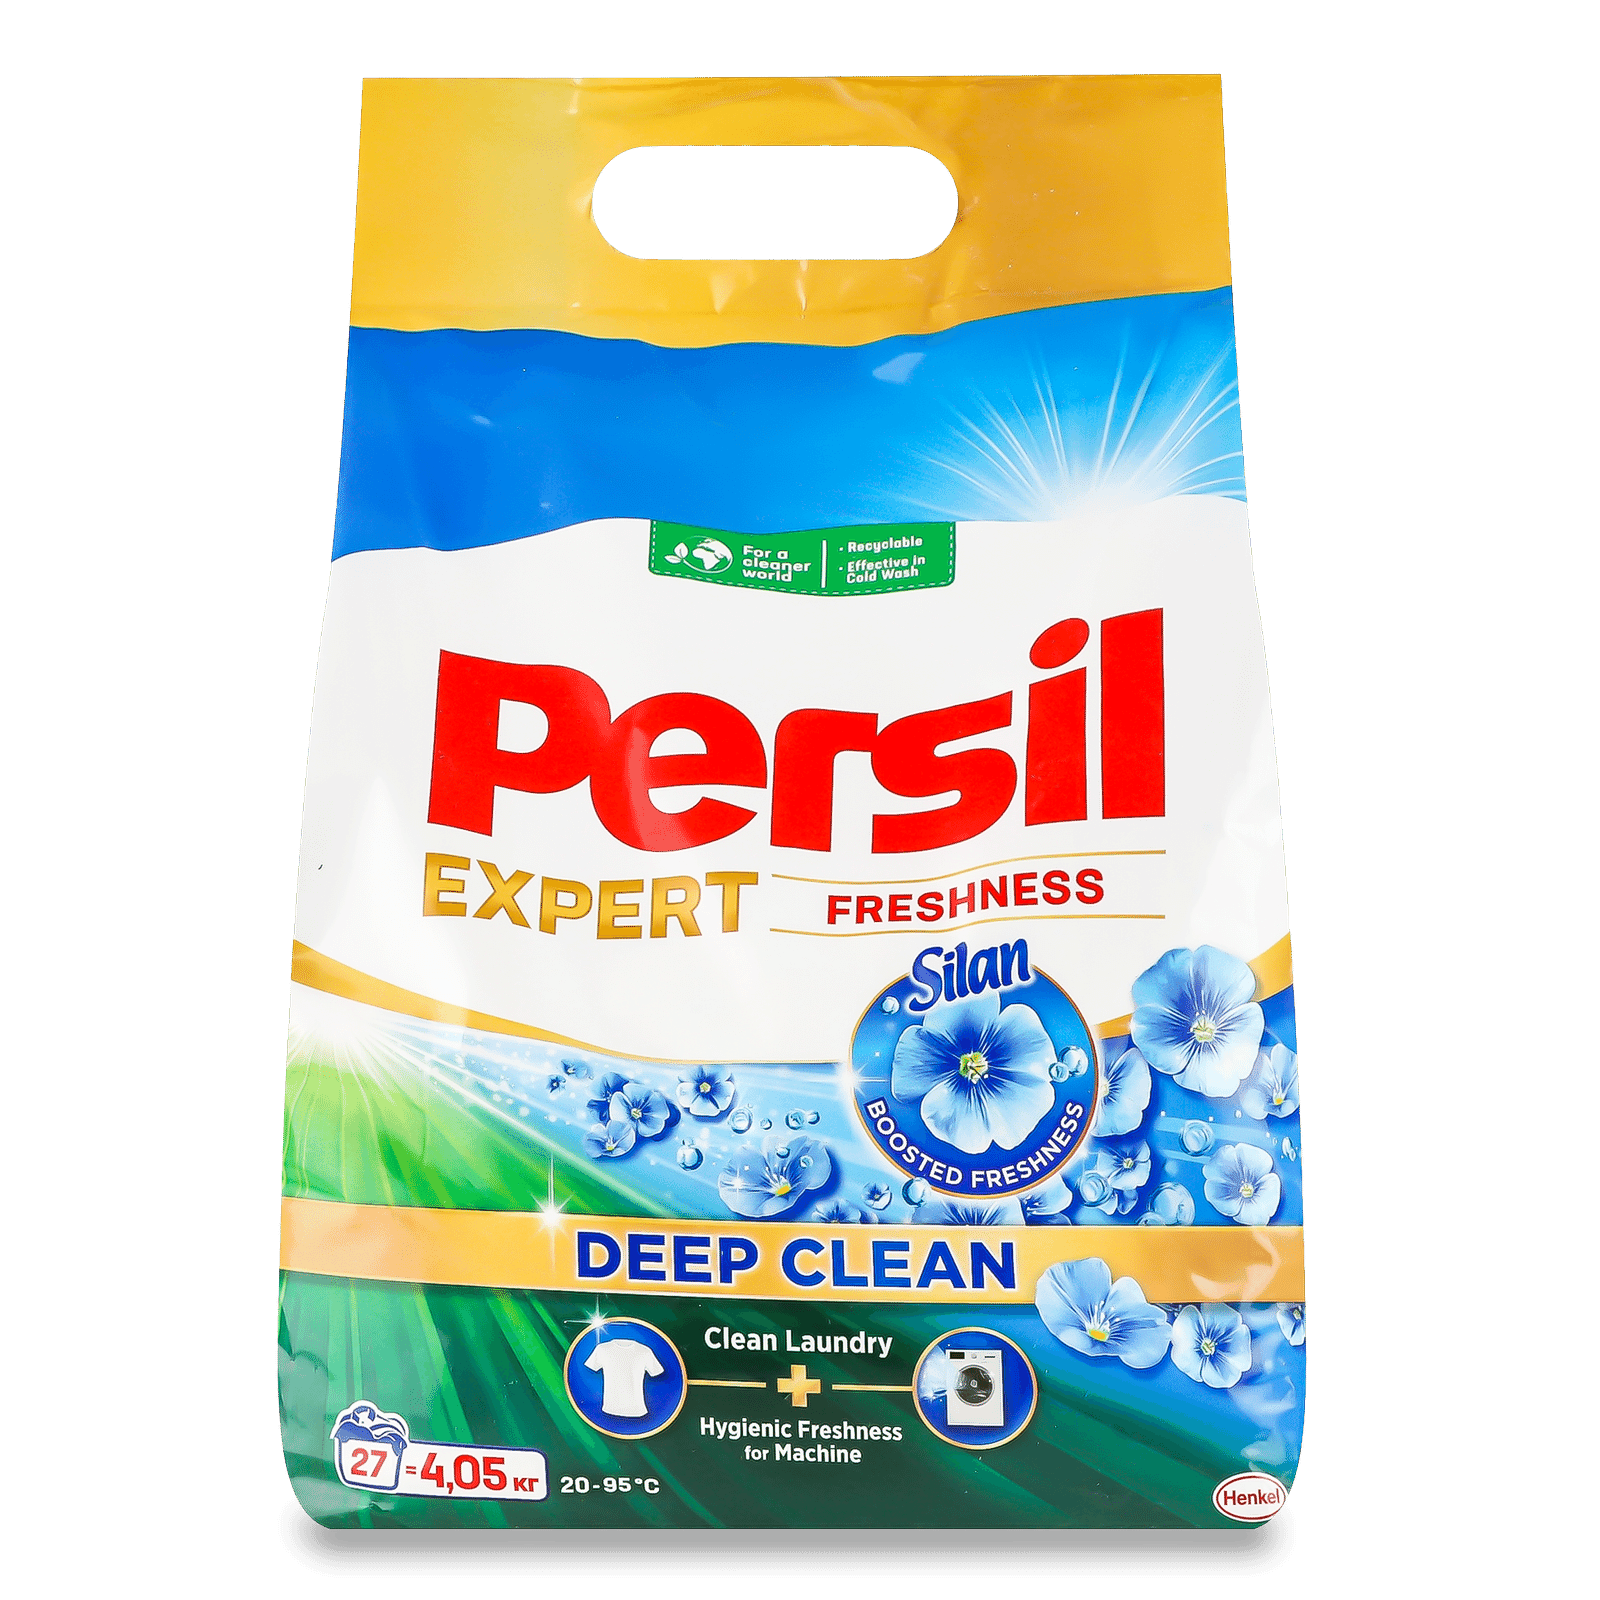 Порошок пральний Persil Expert Freshness Silan - 1